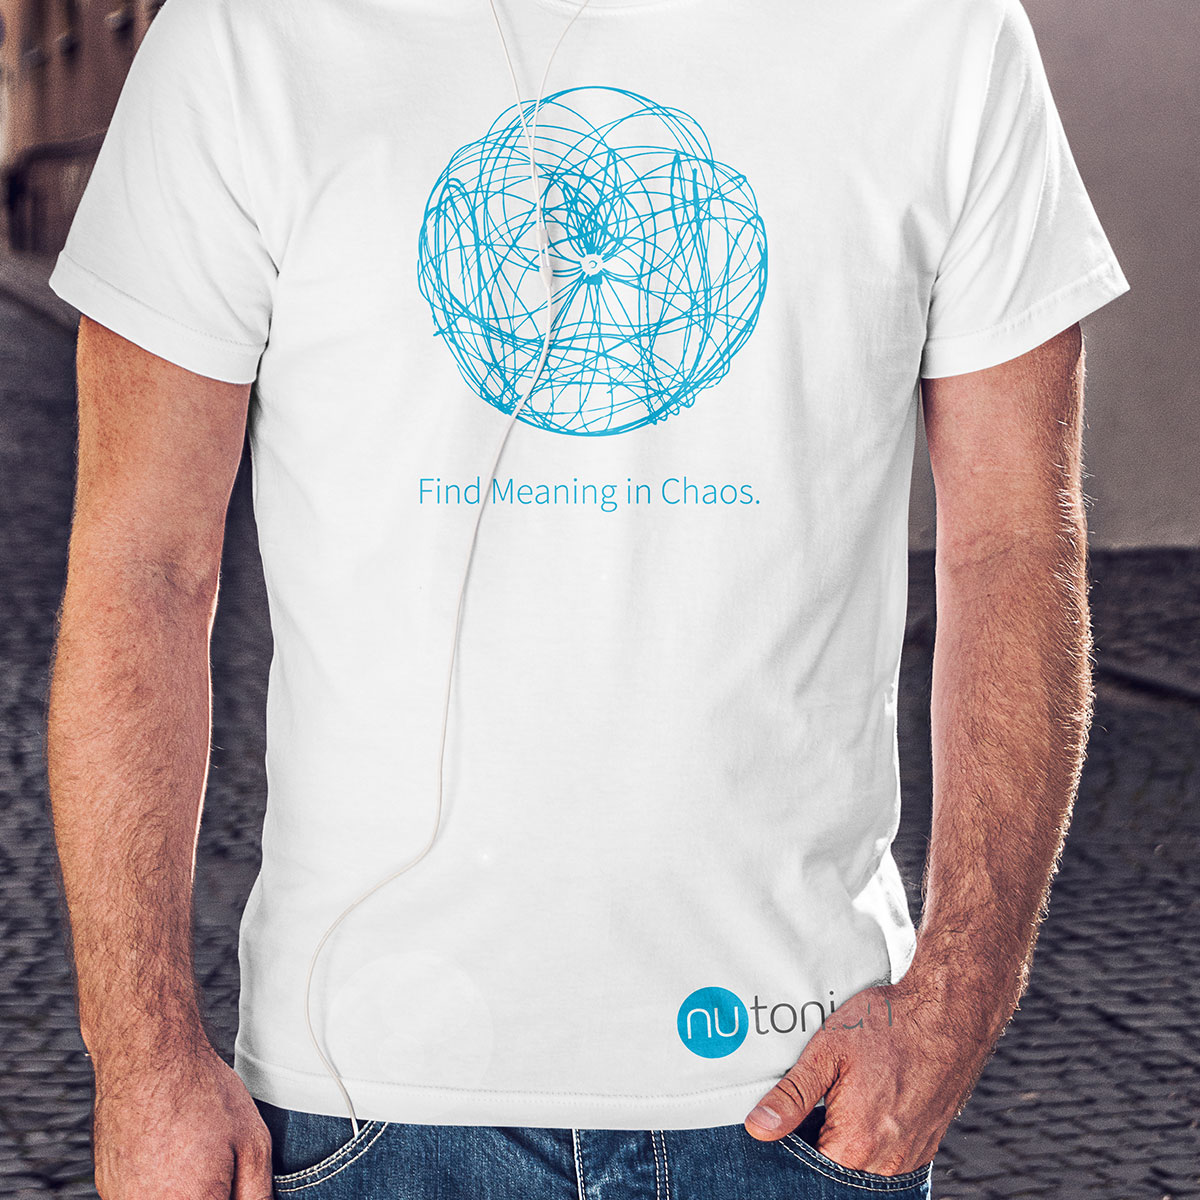 Nutonian T-Shirt Design